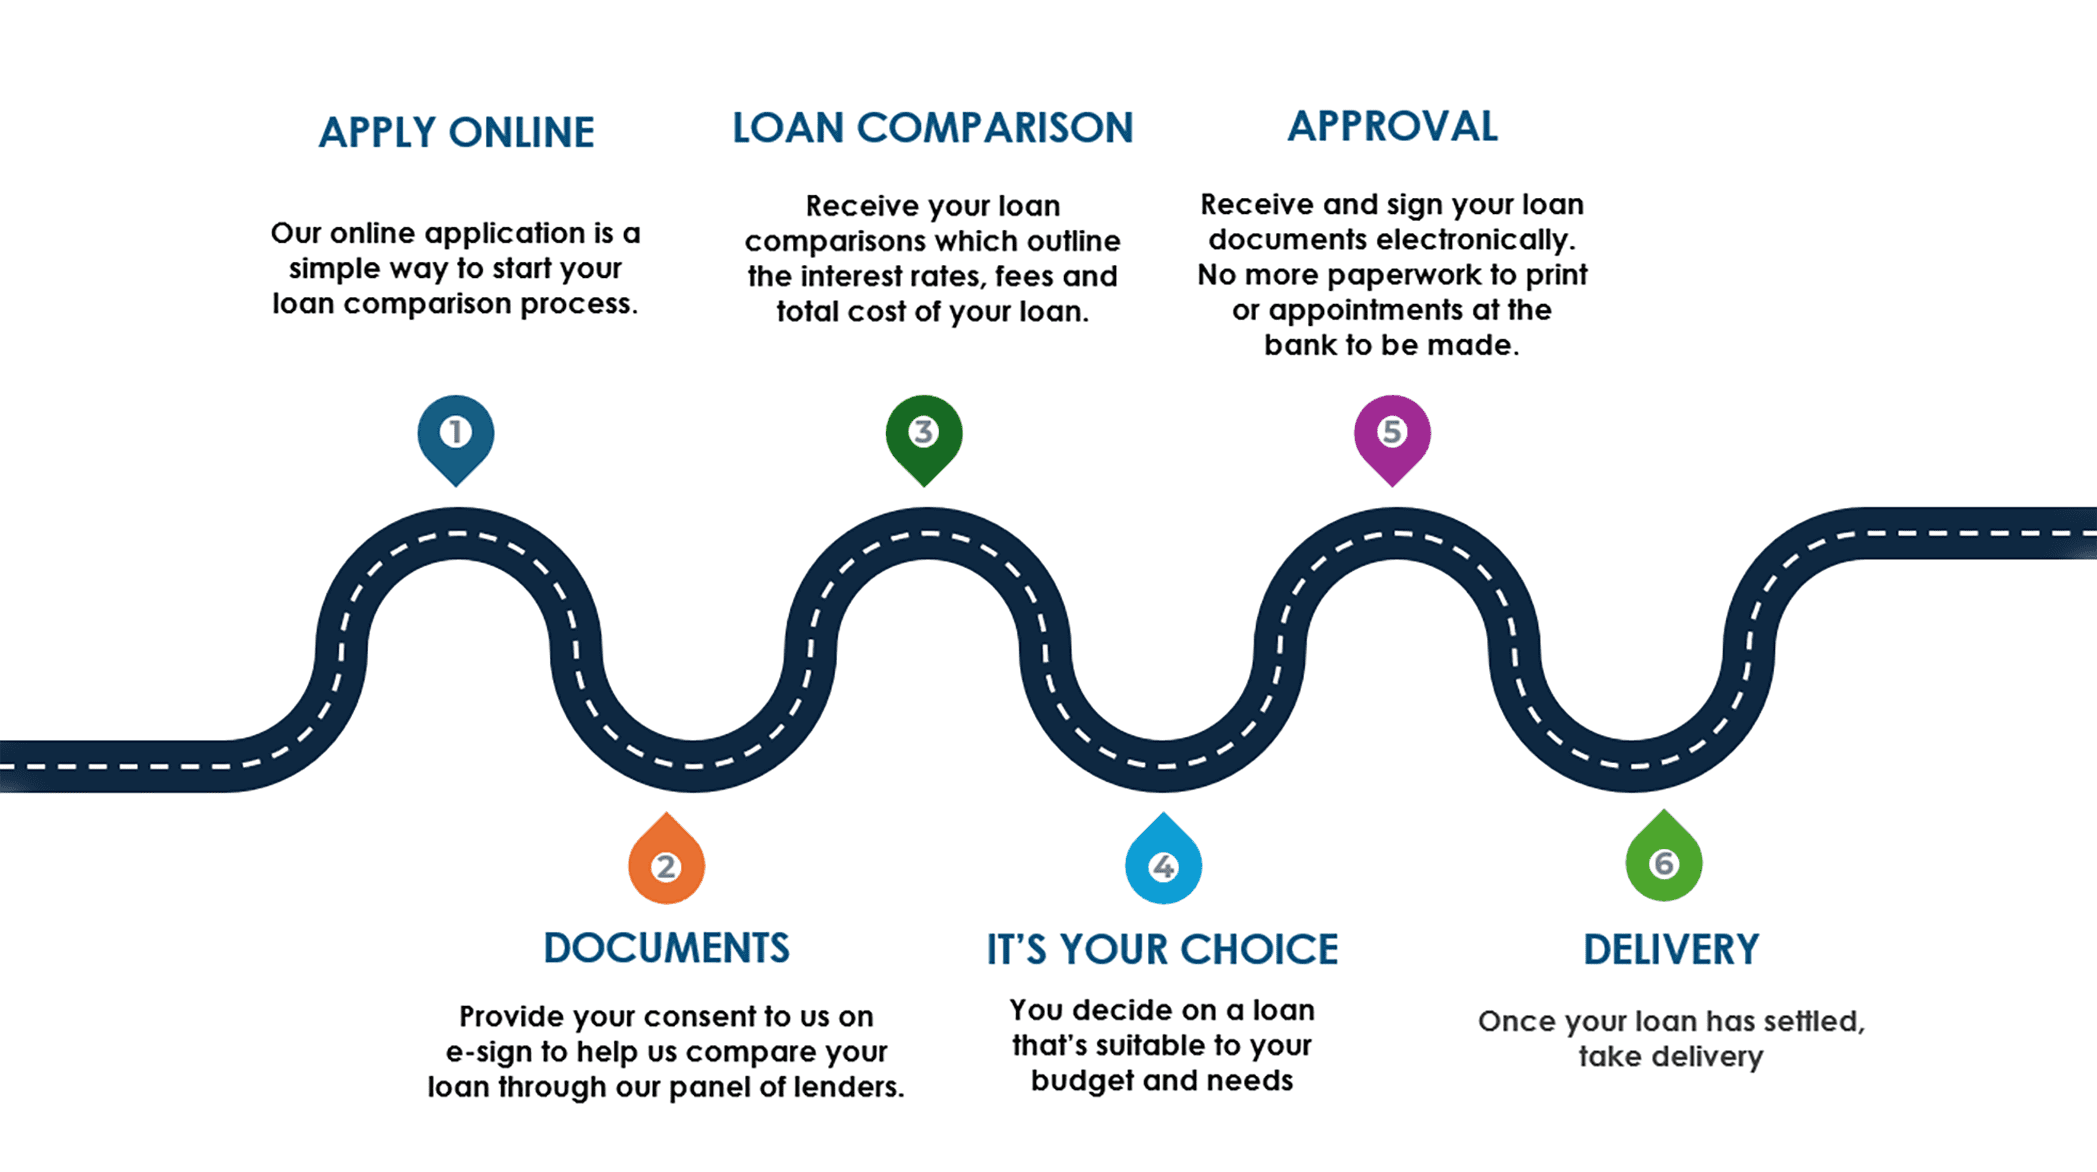 iCREDIT loan roadmap showing the steps to secure a loan